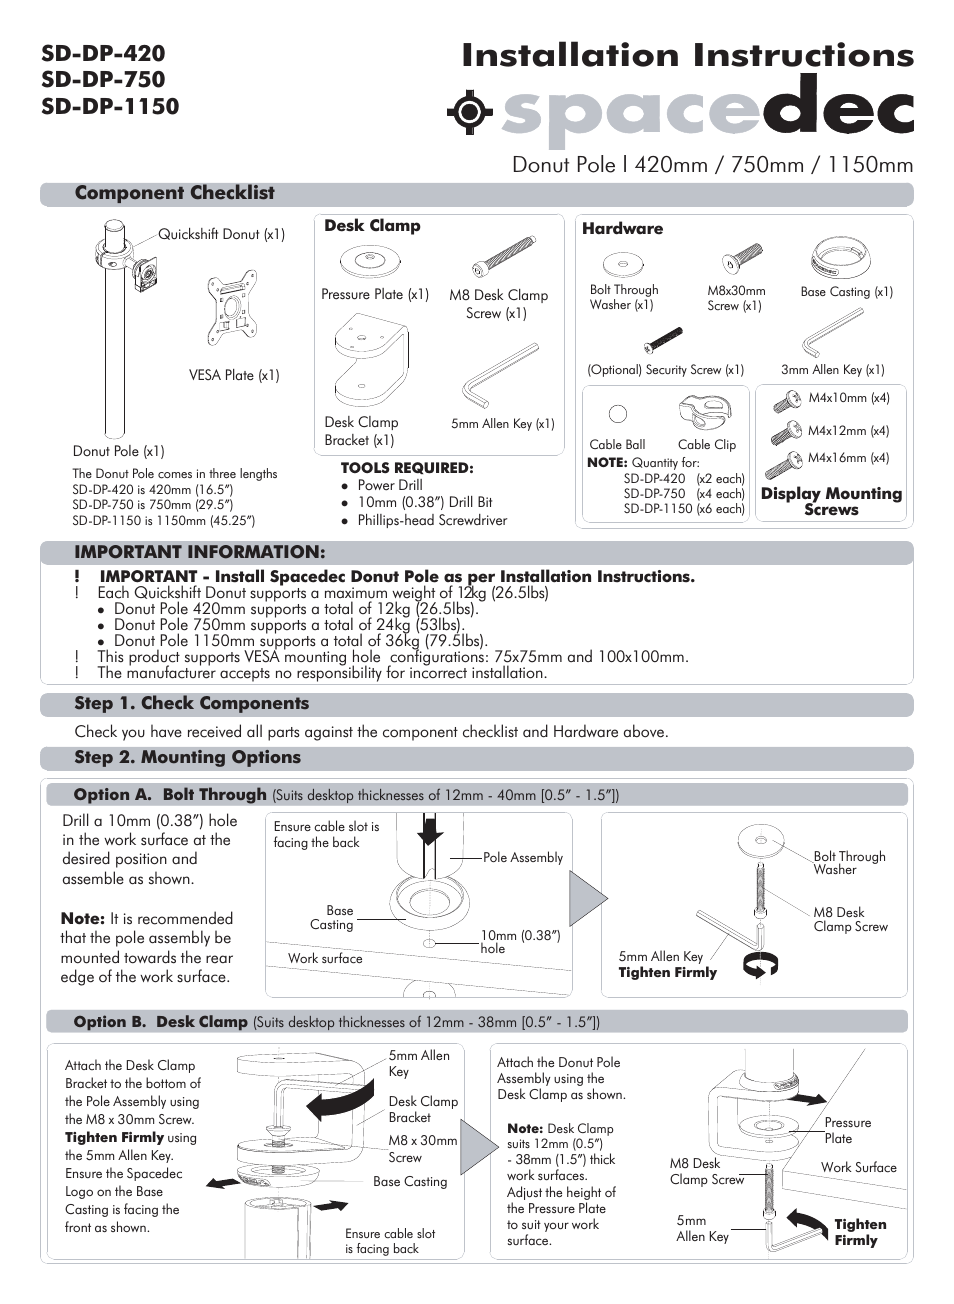 Spacedec SD-DP-750 Installation manual